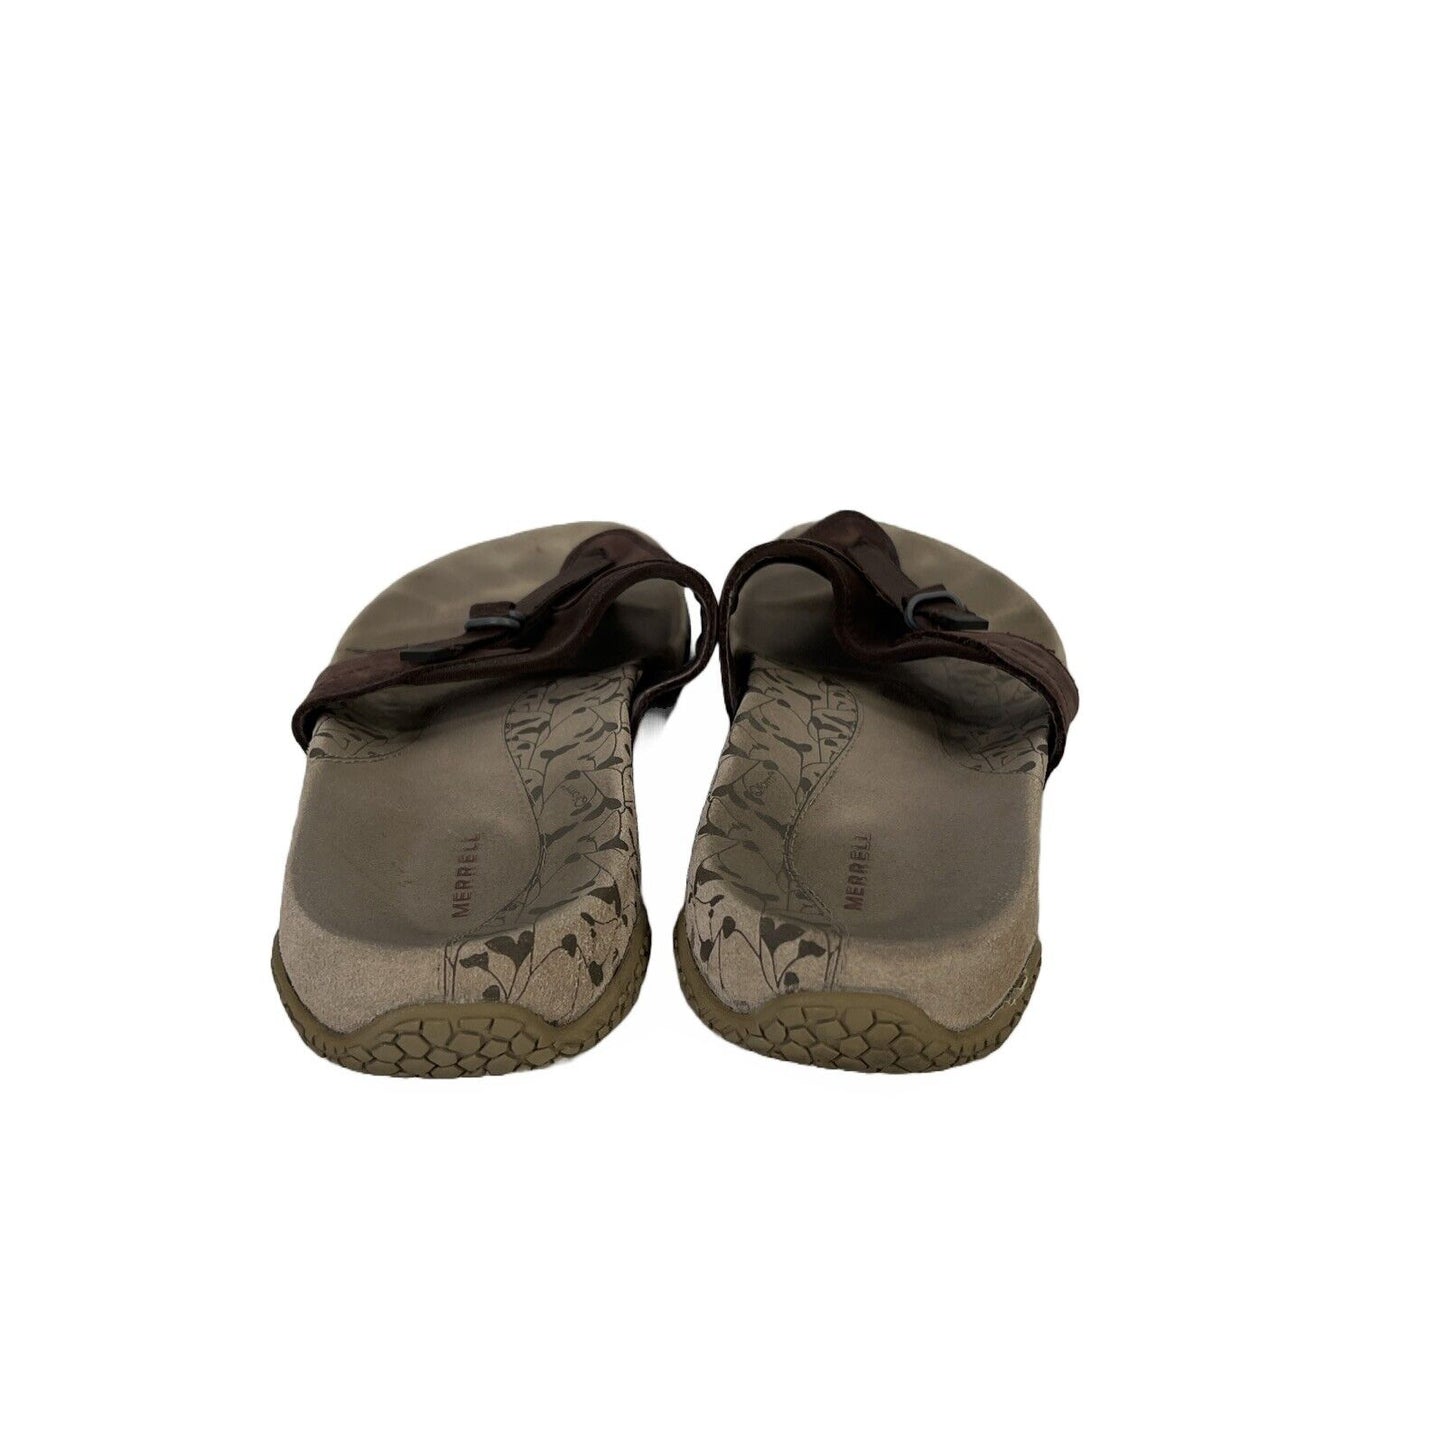 Merrell Women's Brown Dark Earth Sport Flip Flop Sandals - 10